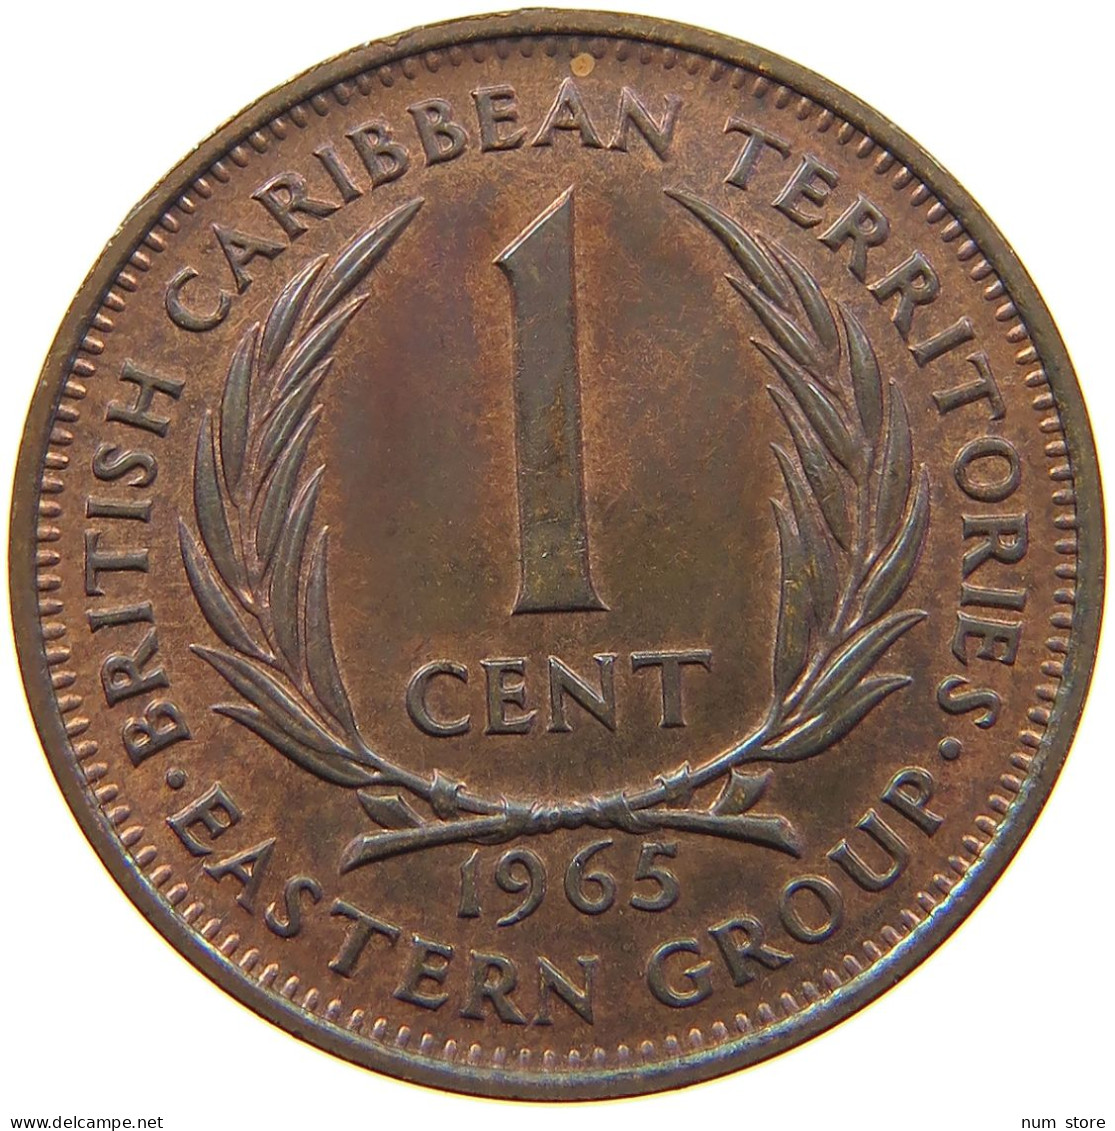 BRITISH CARIBBEAN TERRITORIES CENT 1965 ELIZABETH II. (1952-) #MA 065084 - Caraibi Britannici (Territori)